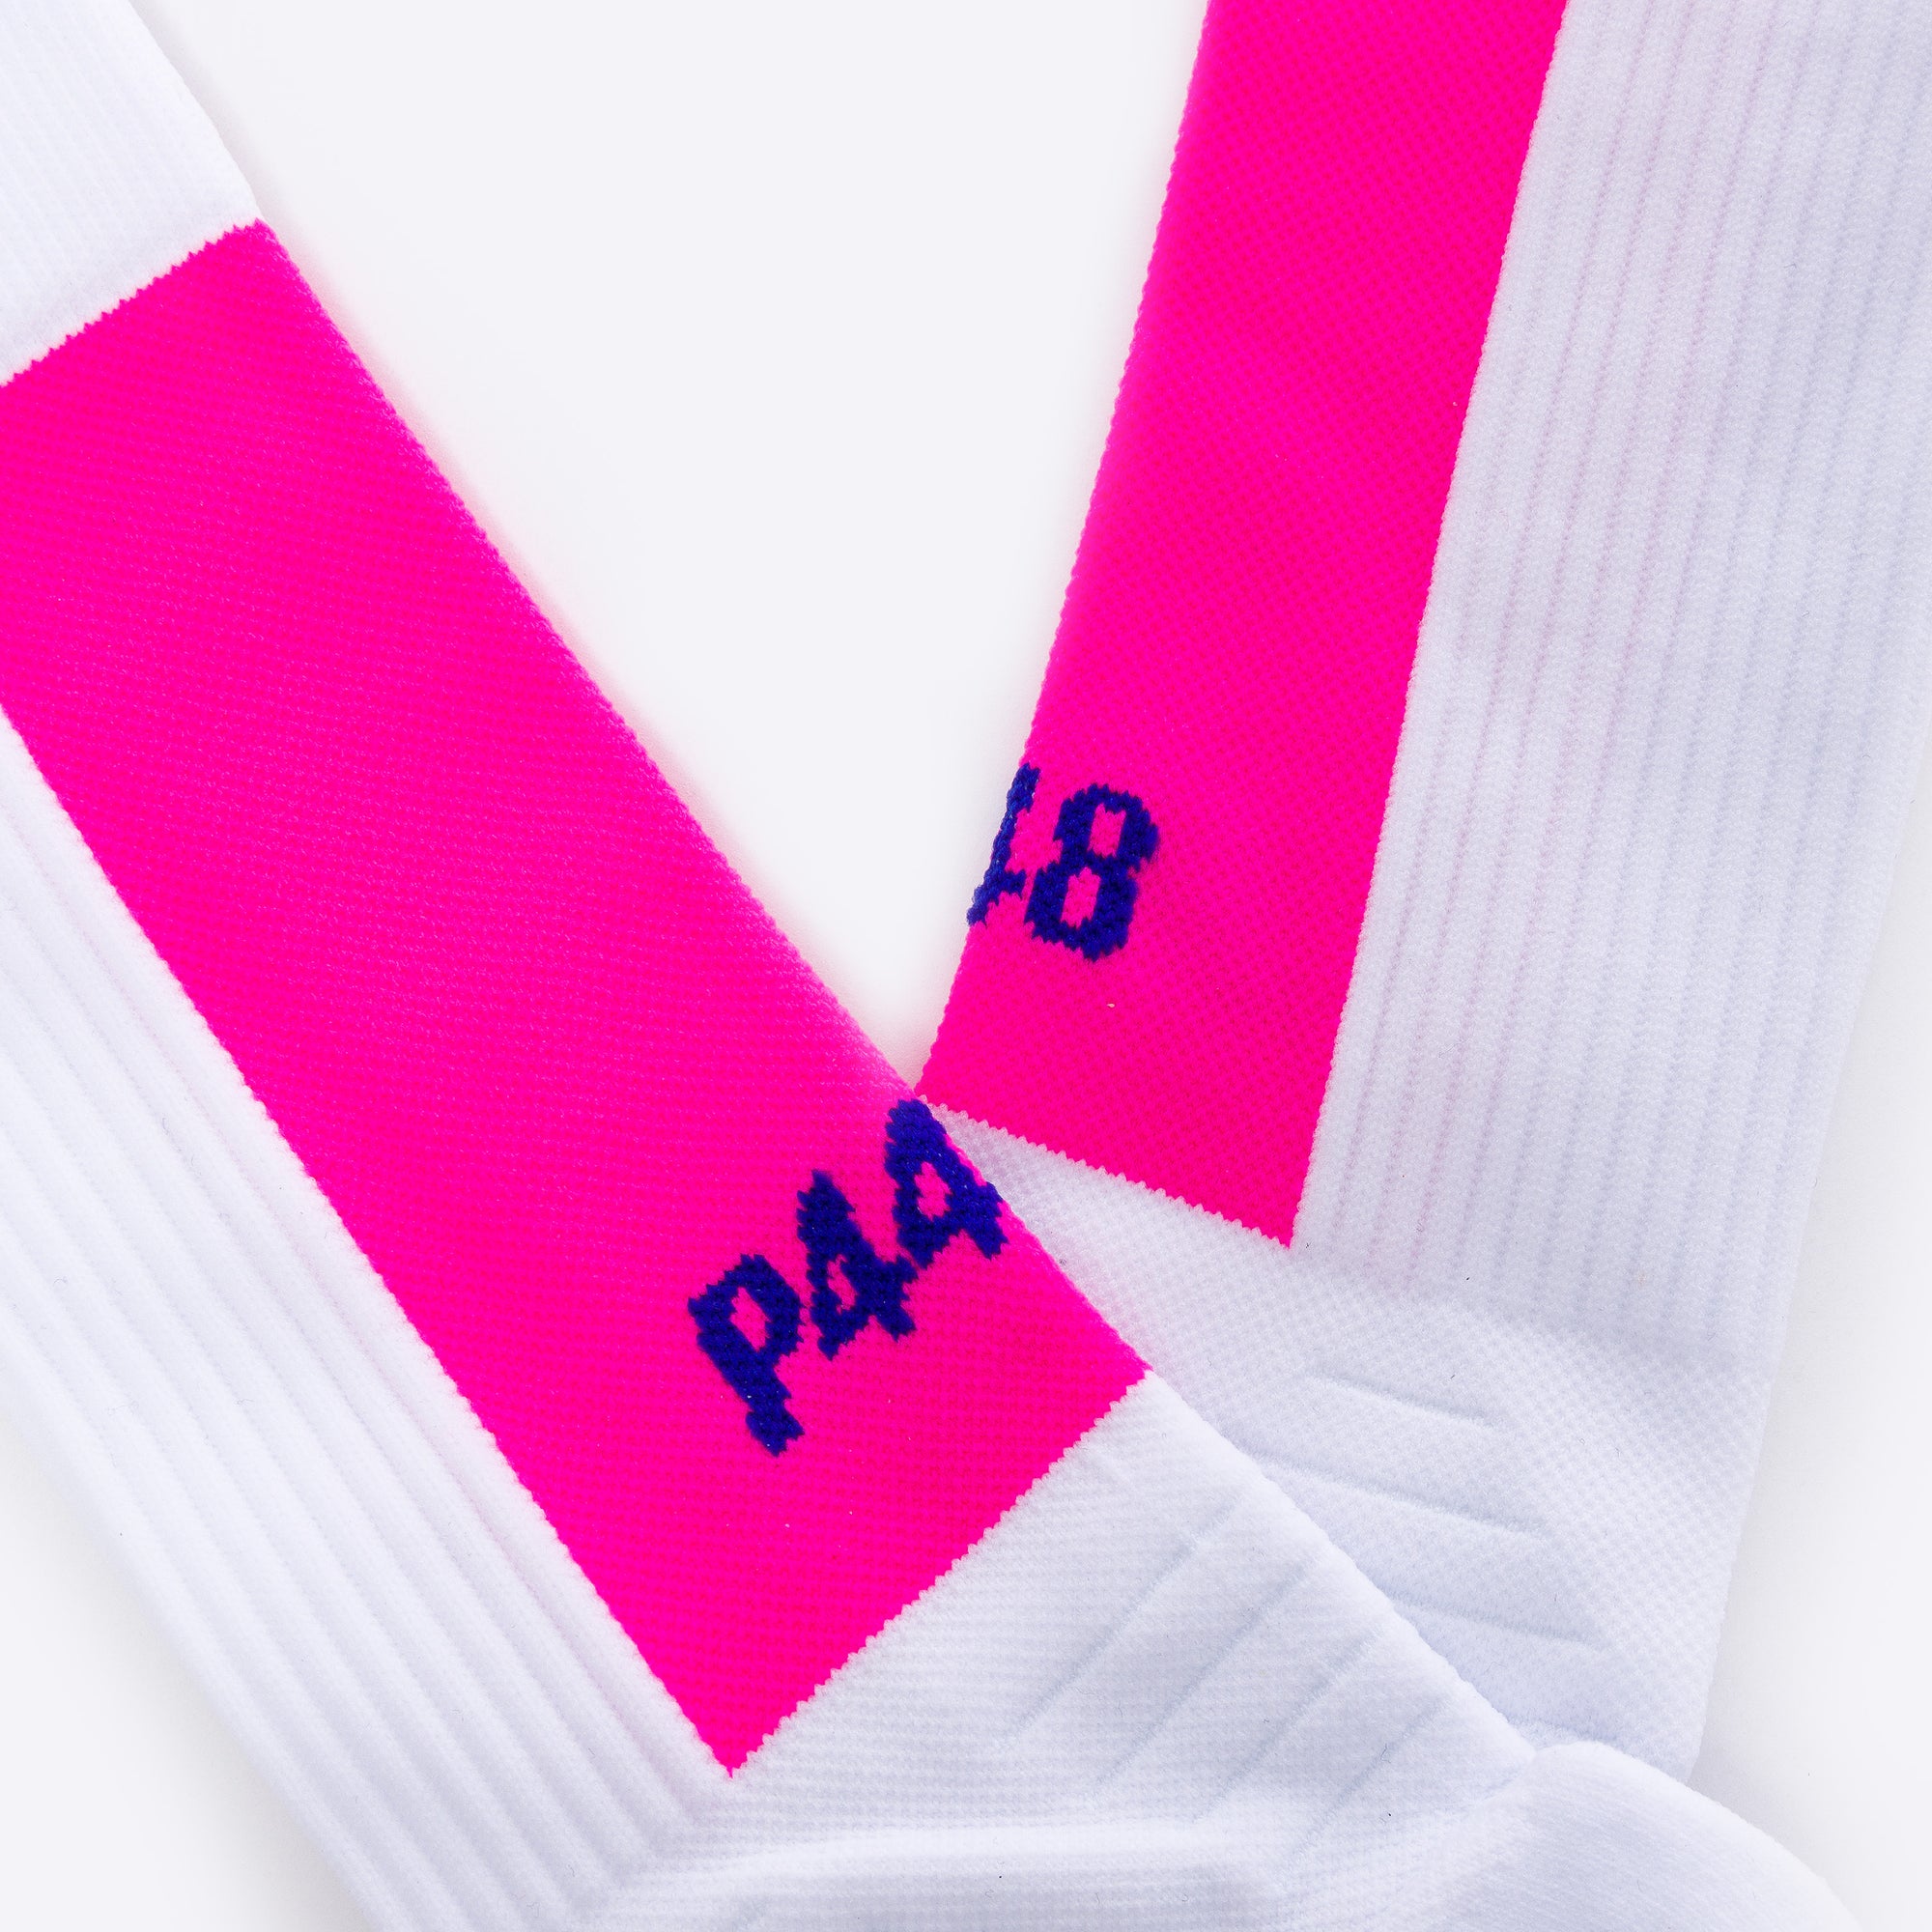 Socks White/Pink